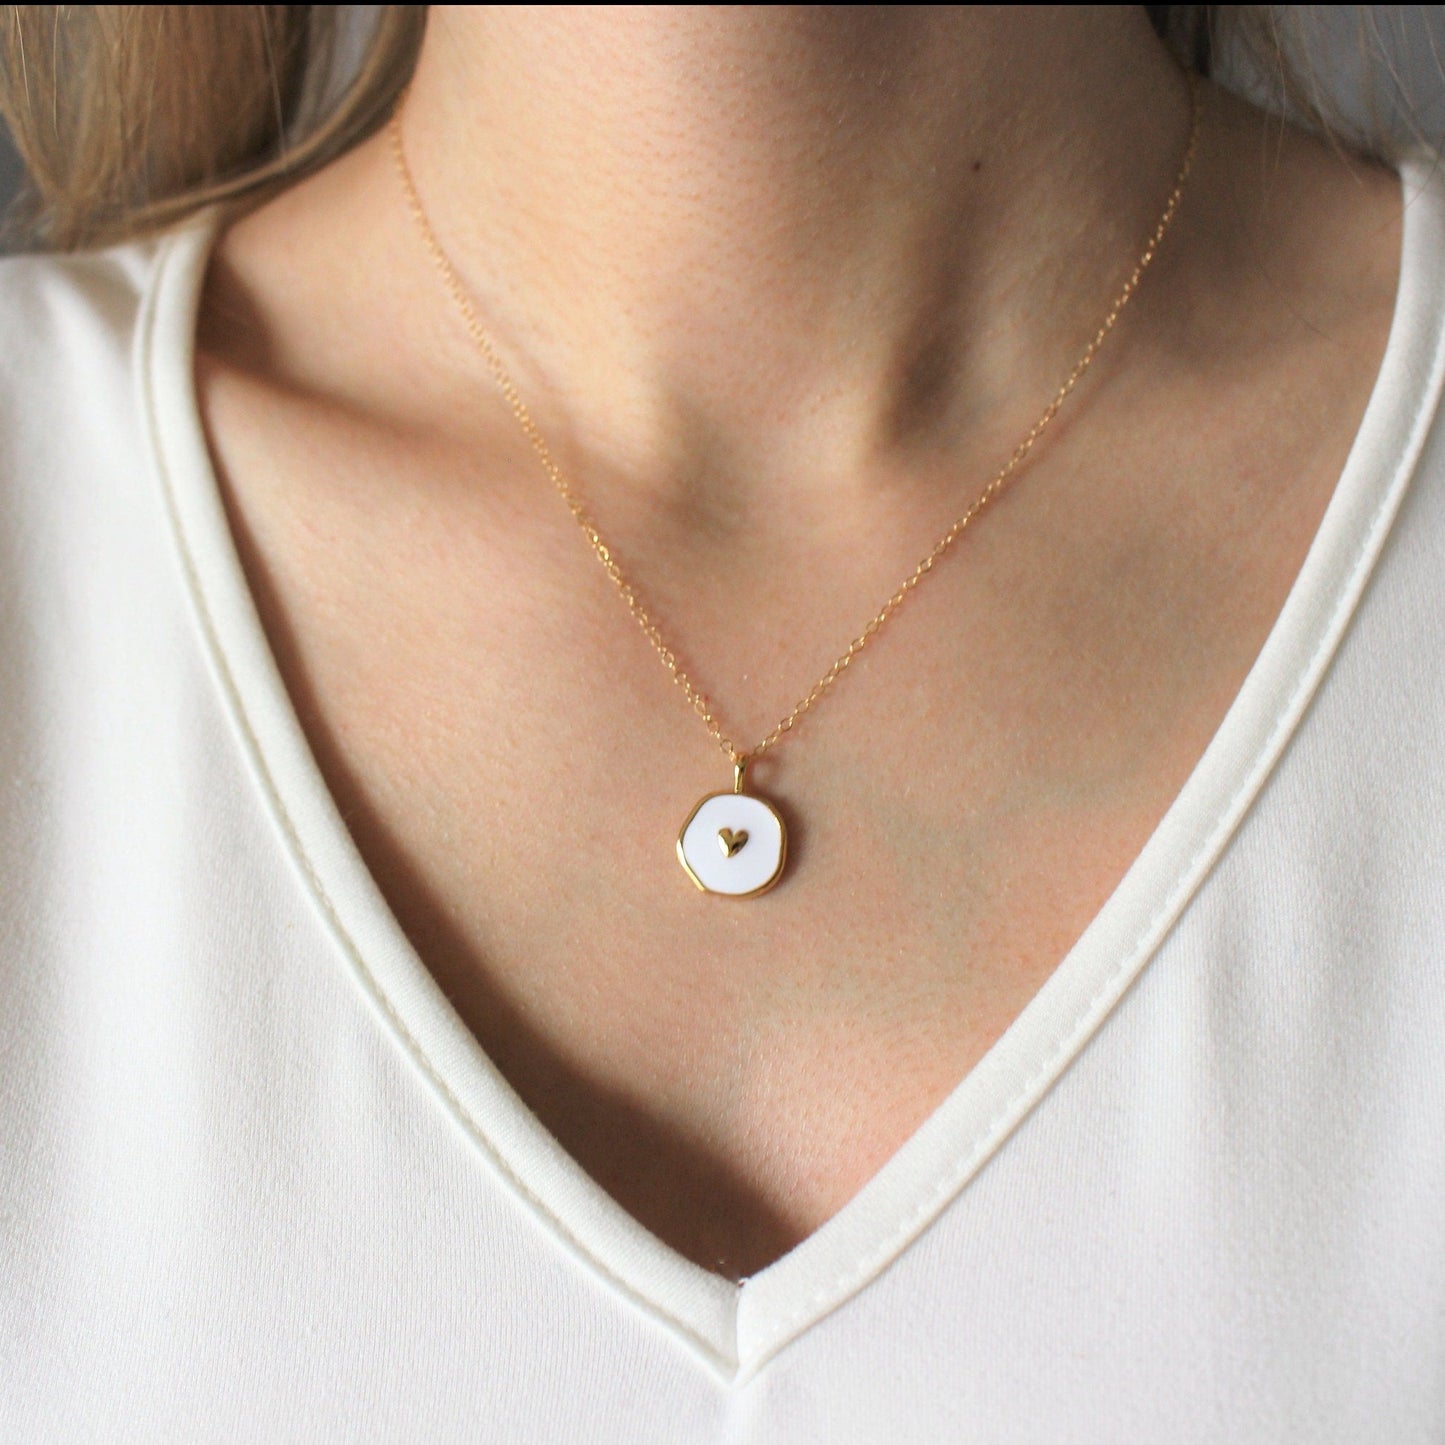 Enamel Magic pendant - Moon and heart necklace